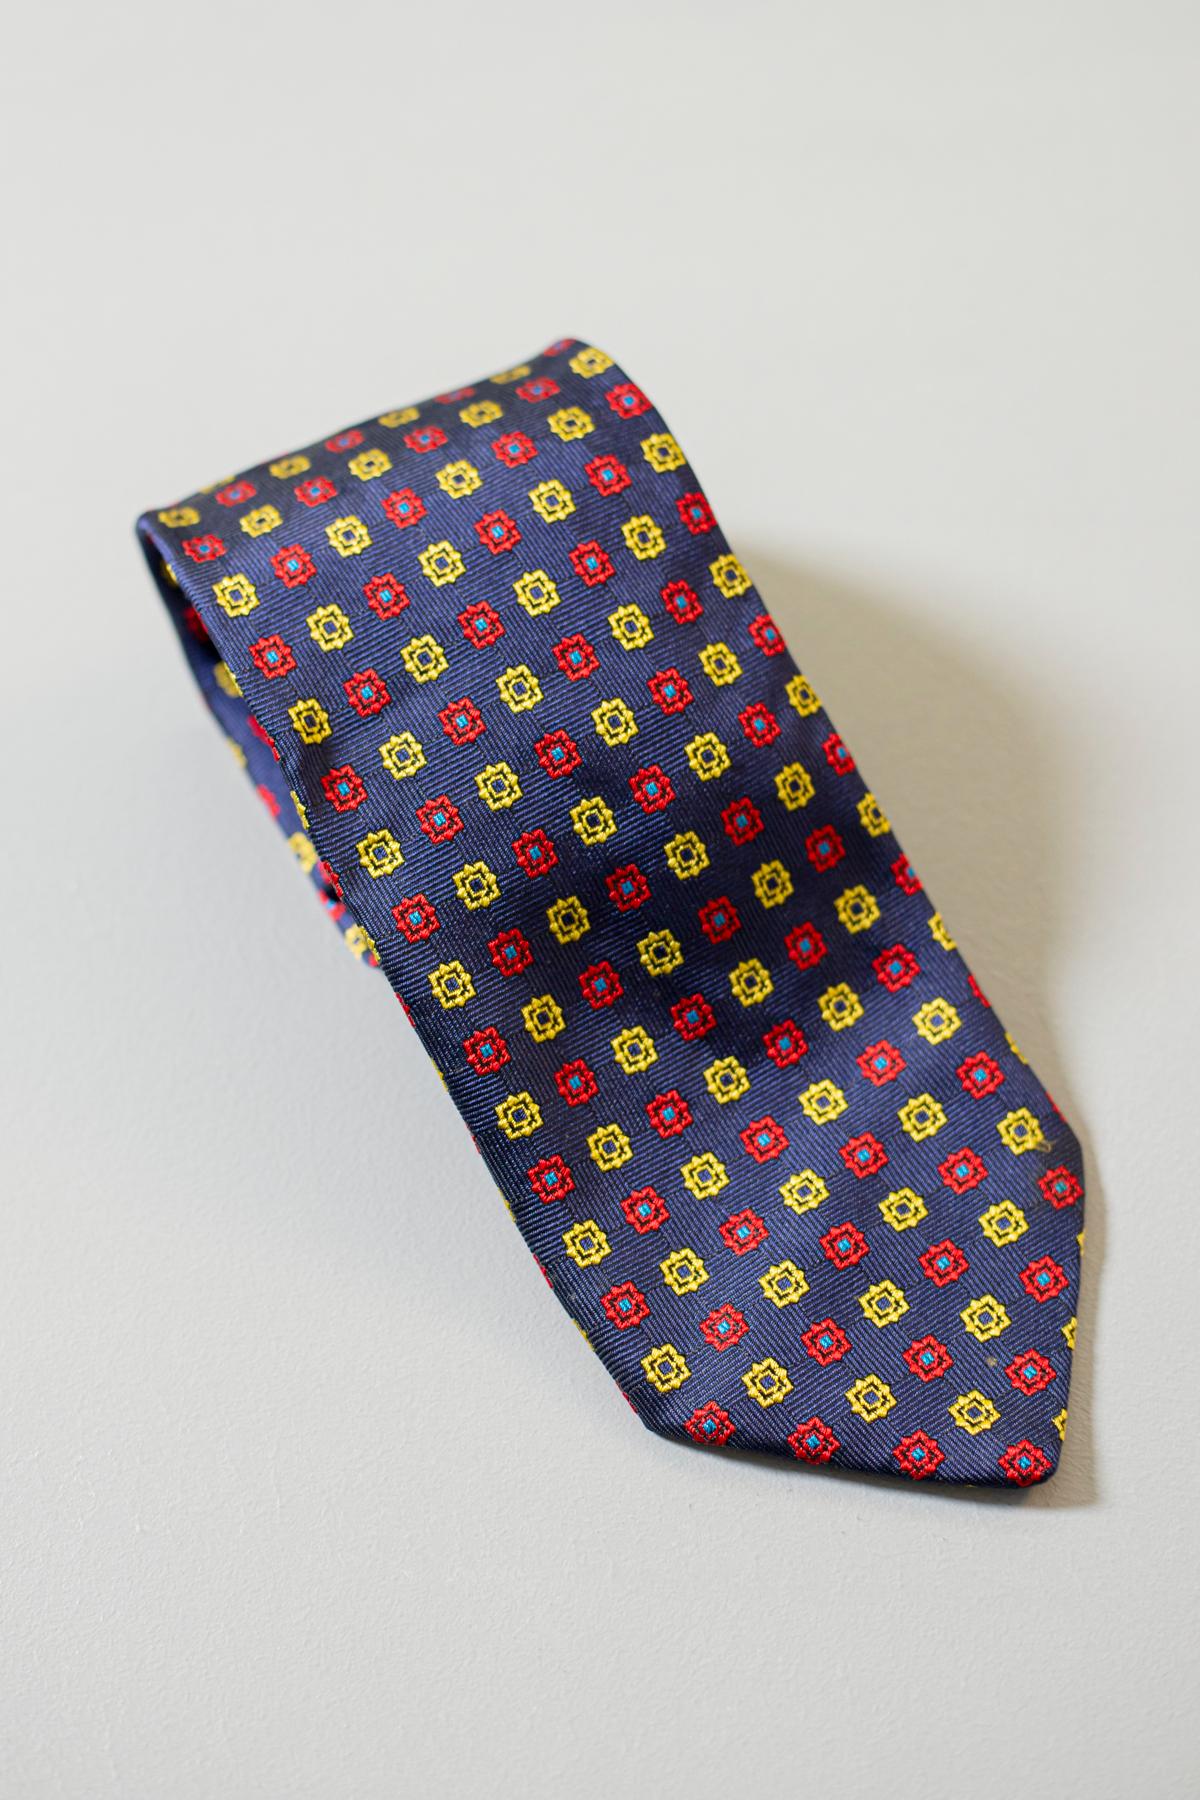 christian dior tie vintage